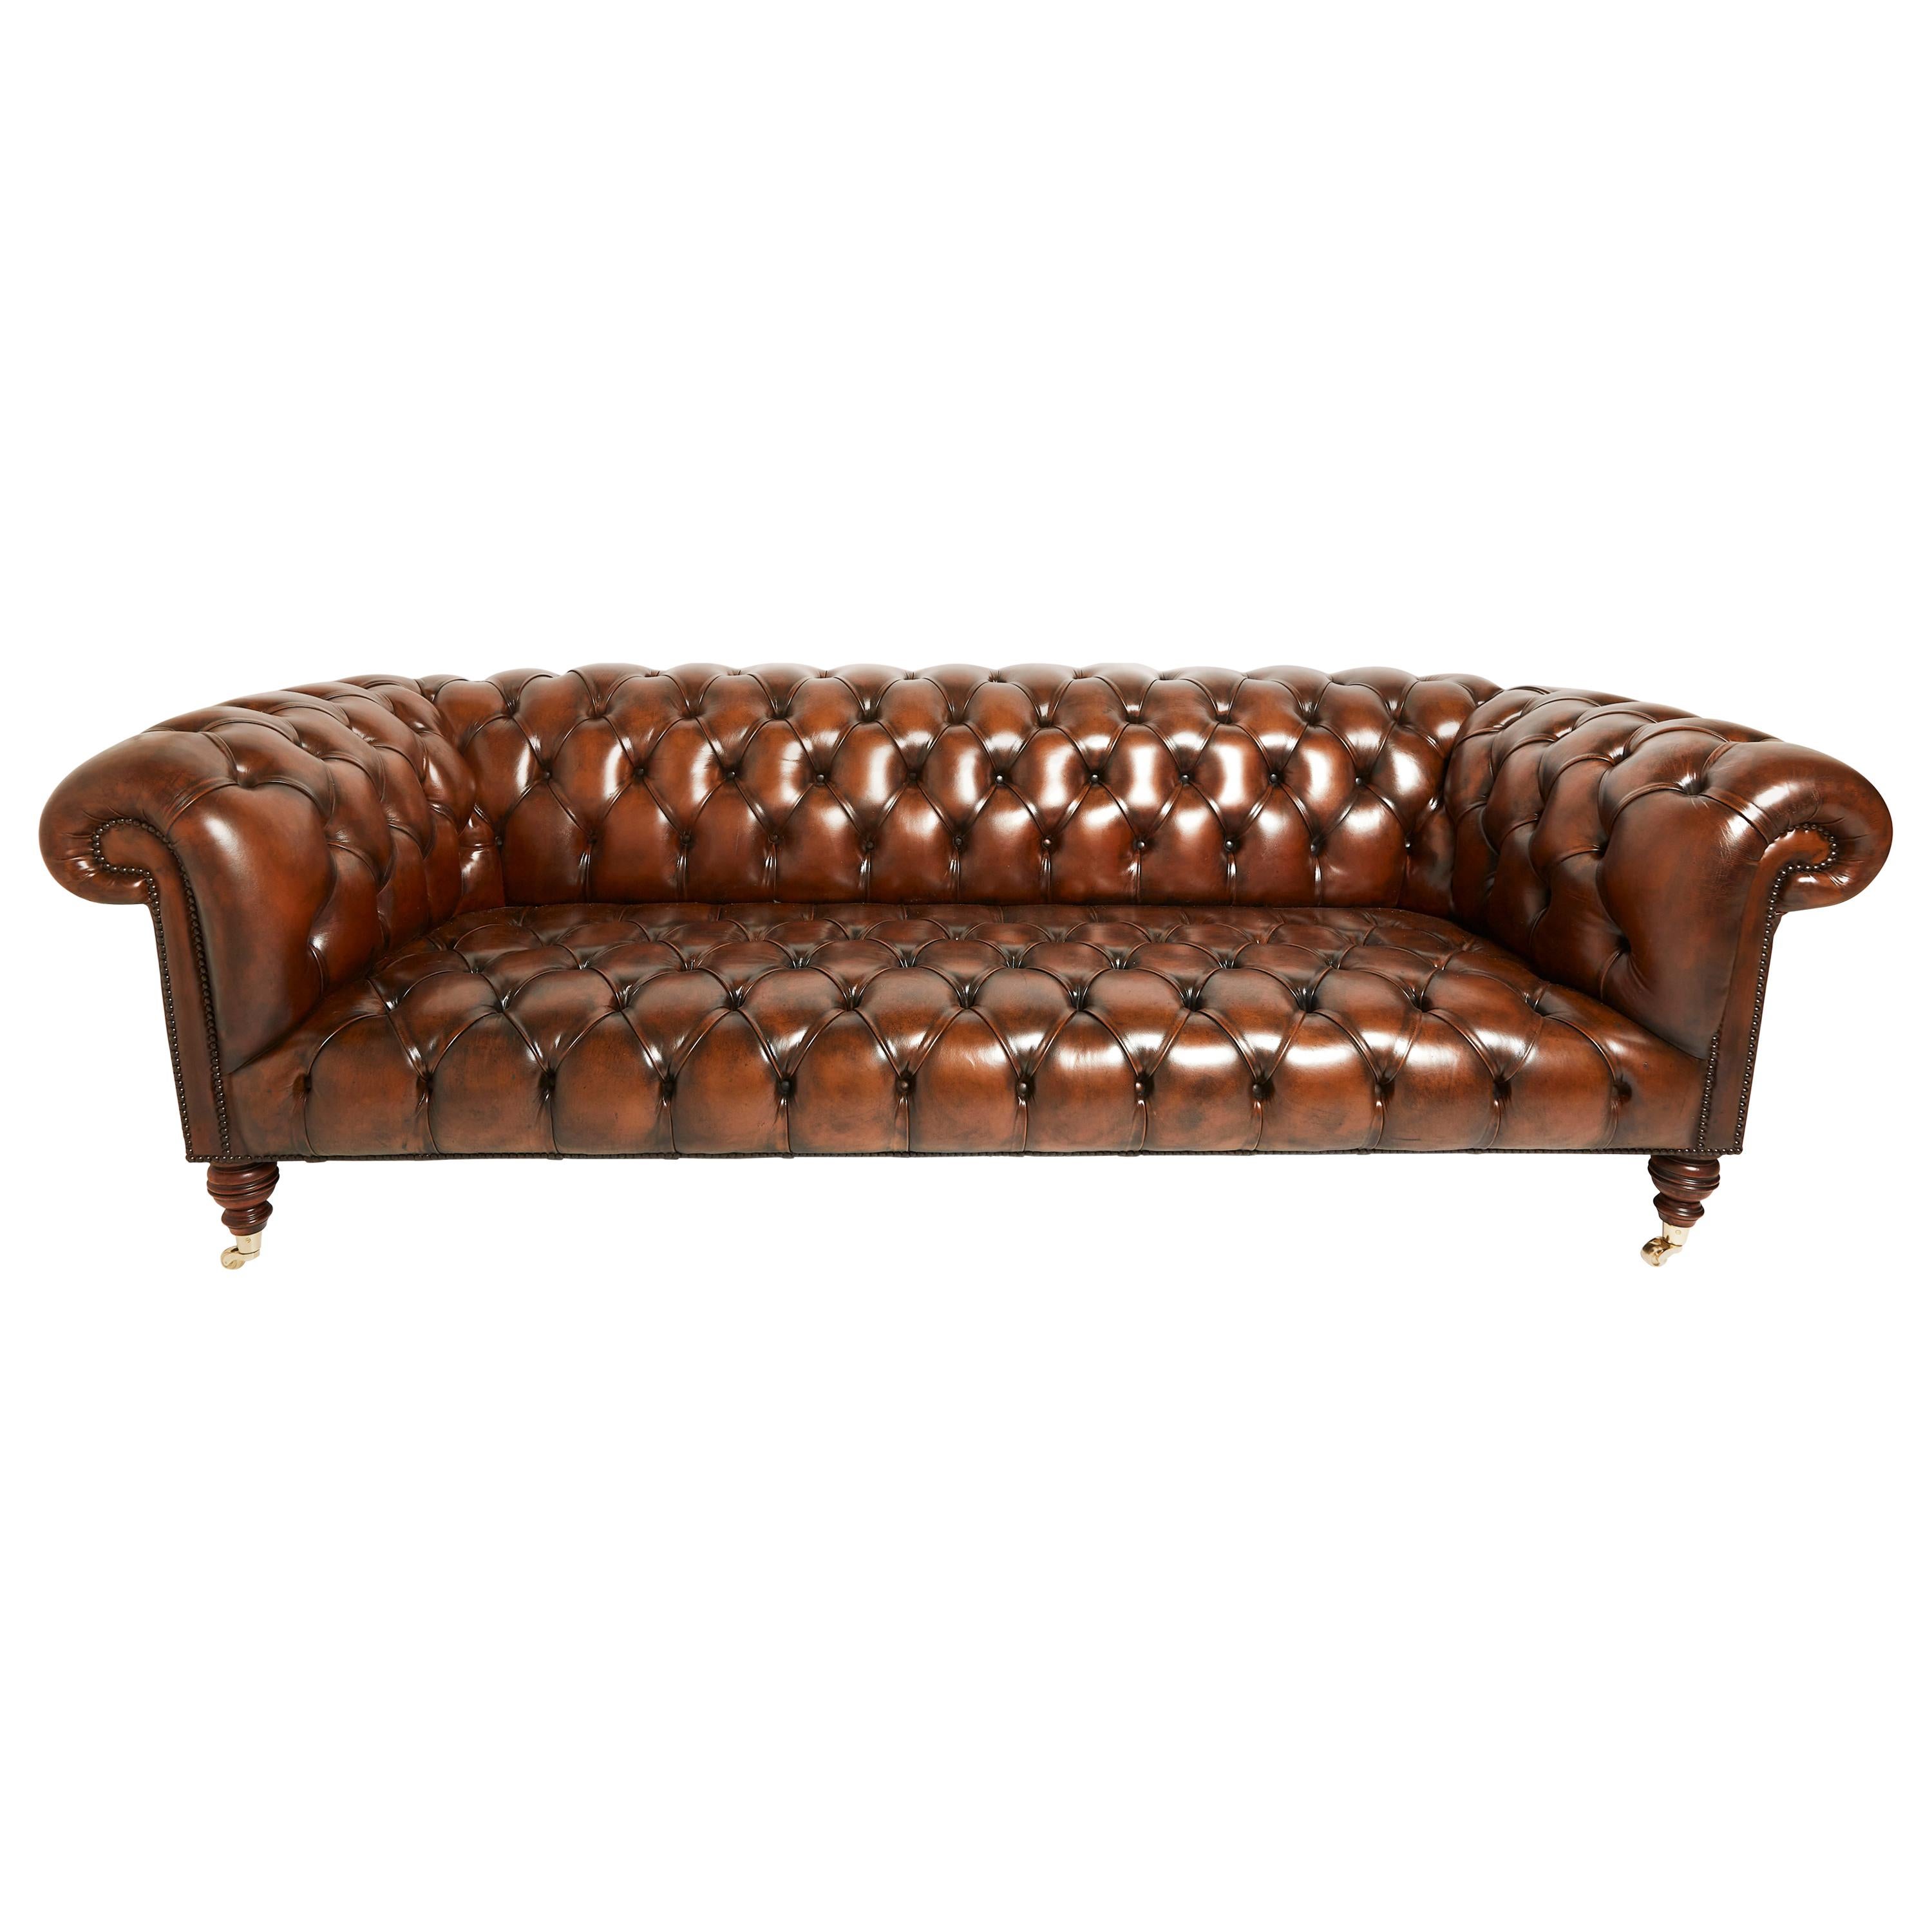 Superb Quality Classic English Chesterfield Sofa